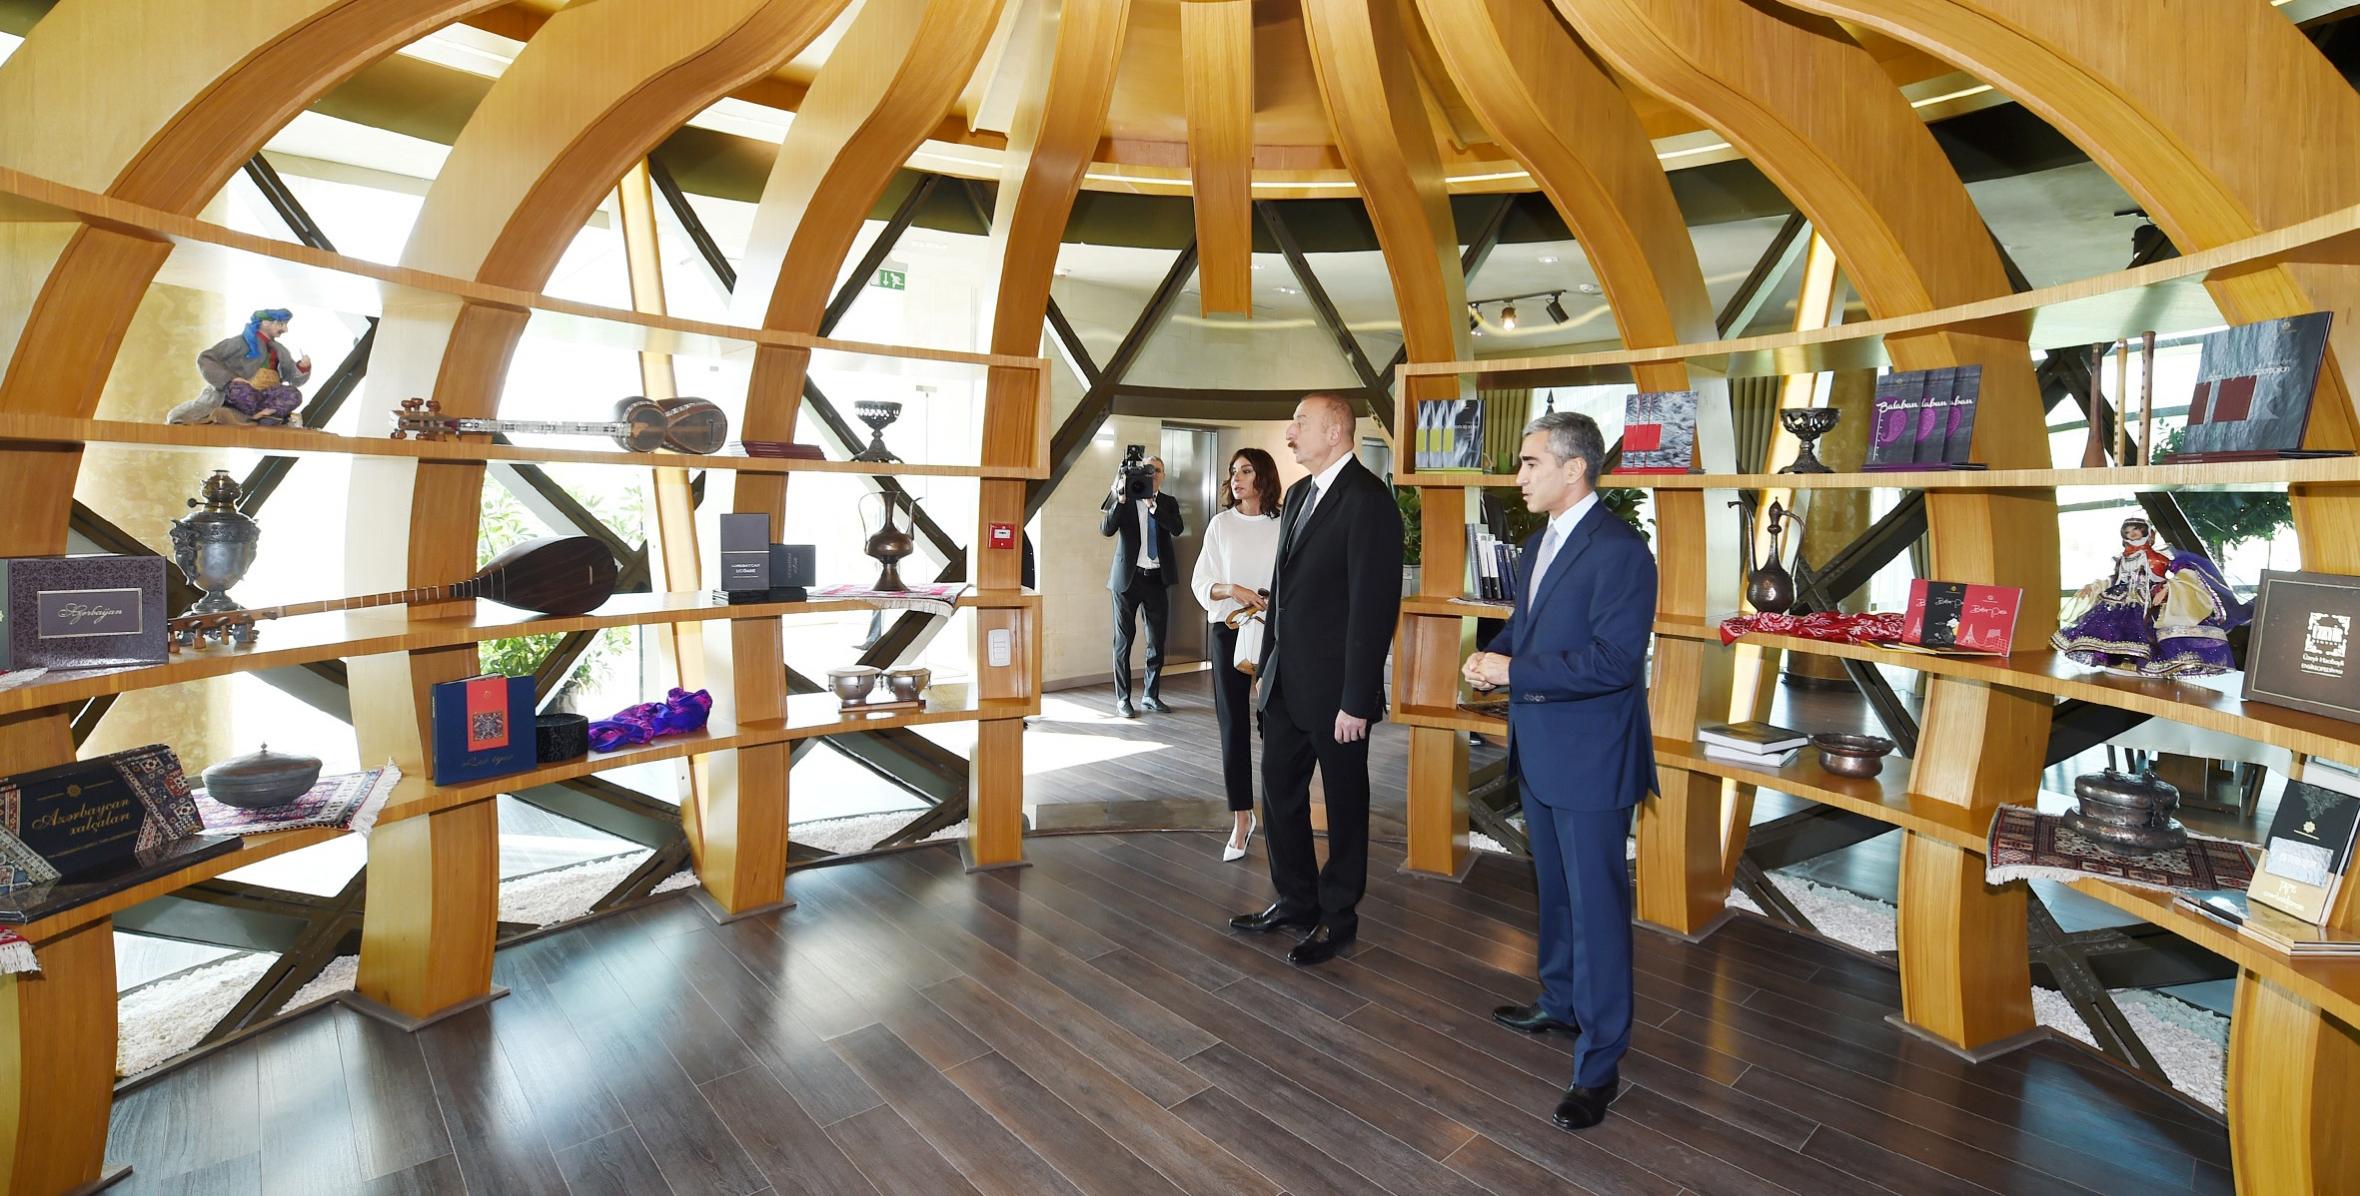 Azerbaijani national pavilion at Milan Expo 2015 rebuilt at Seaside National Park